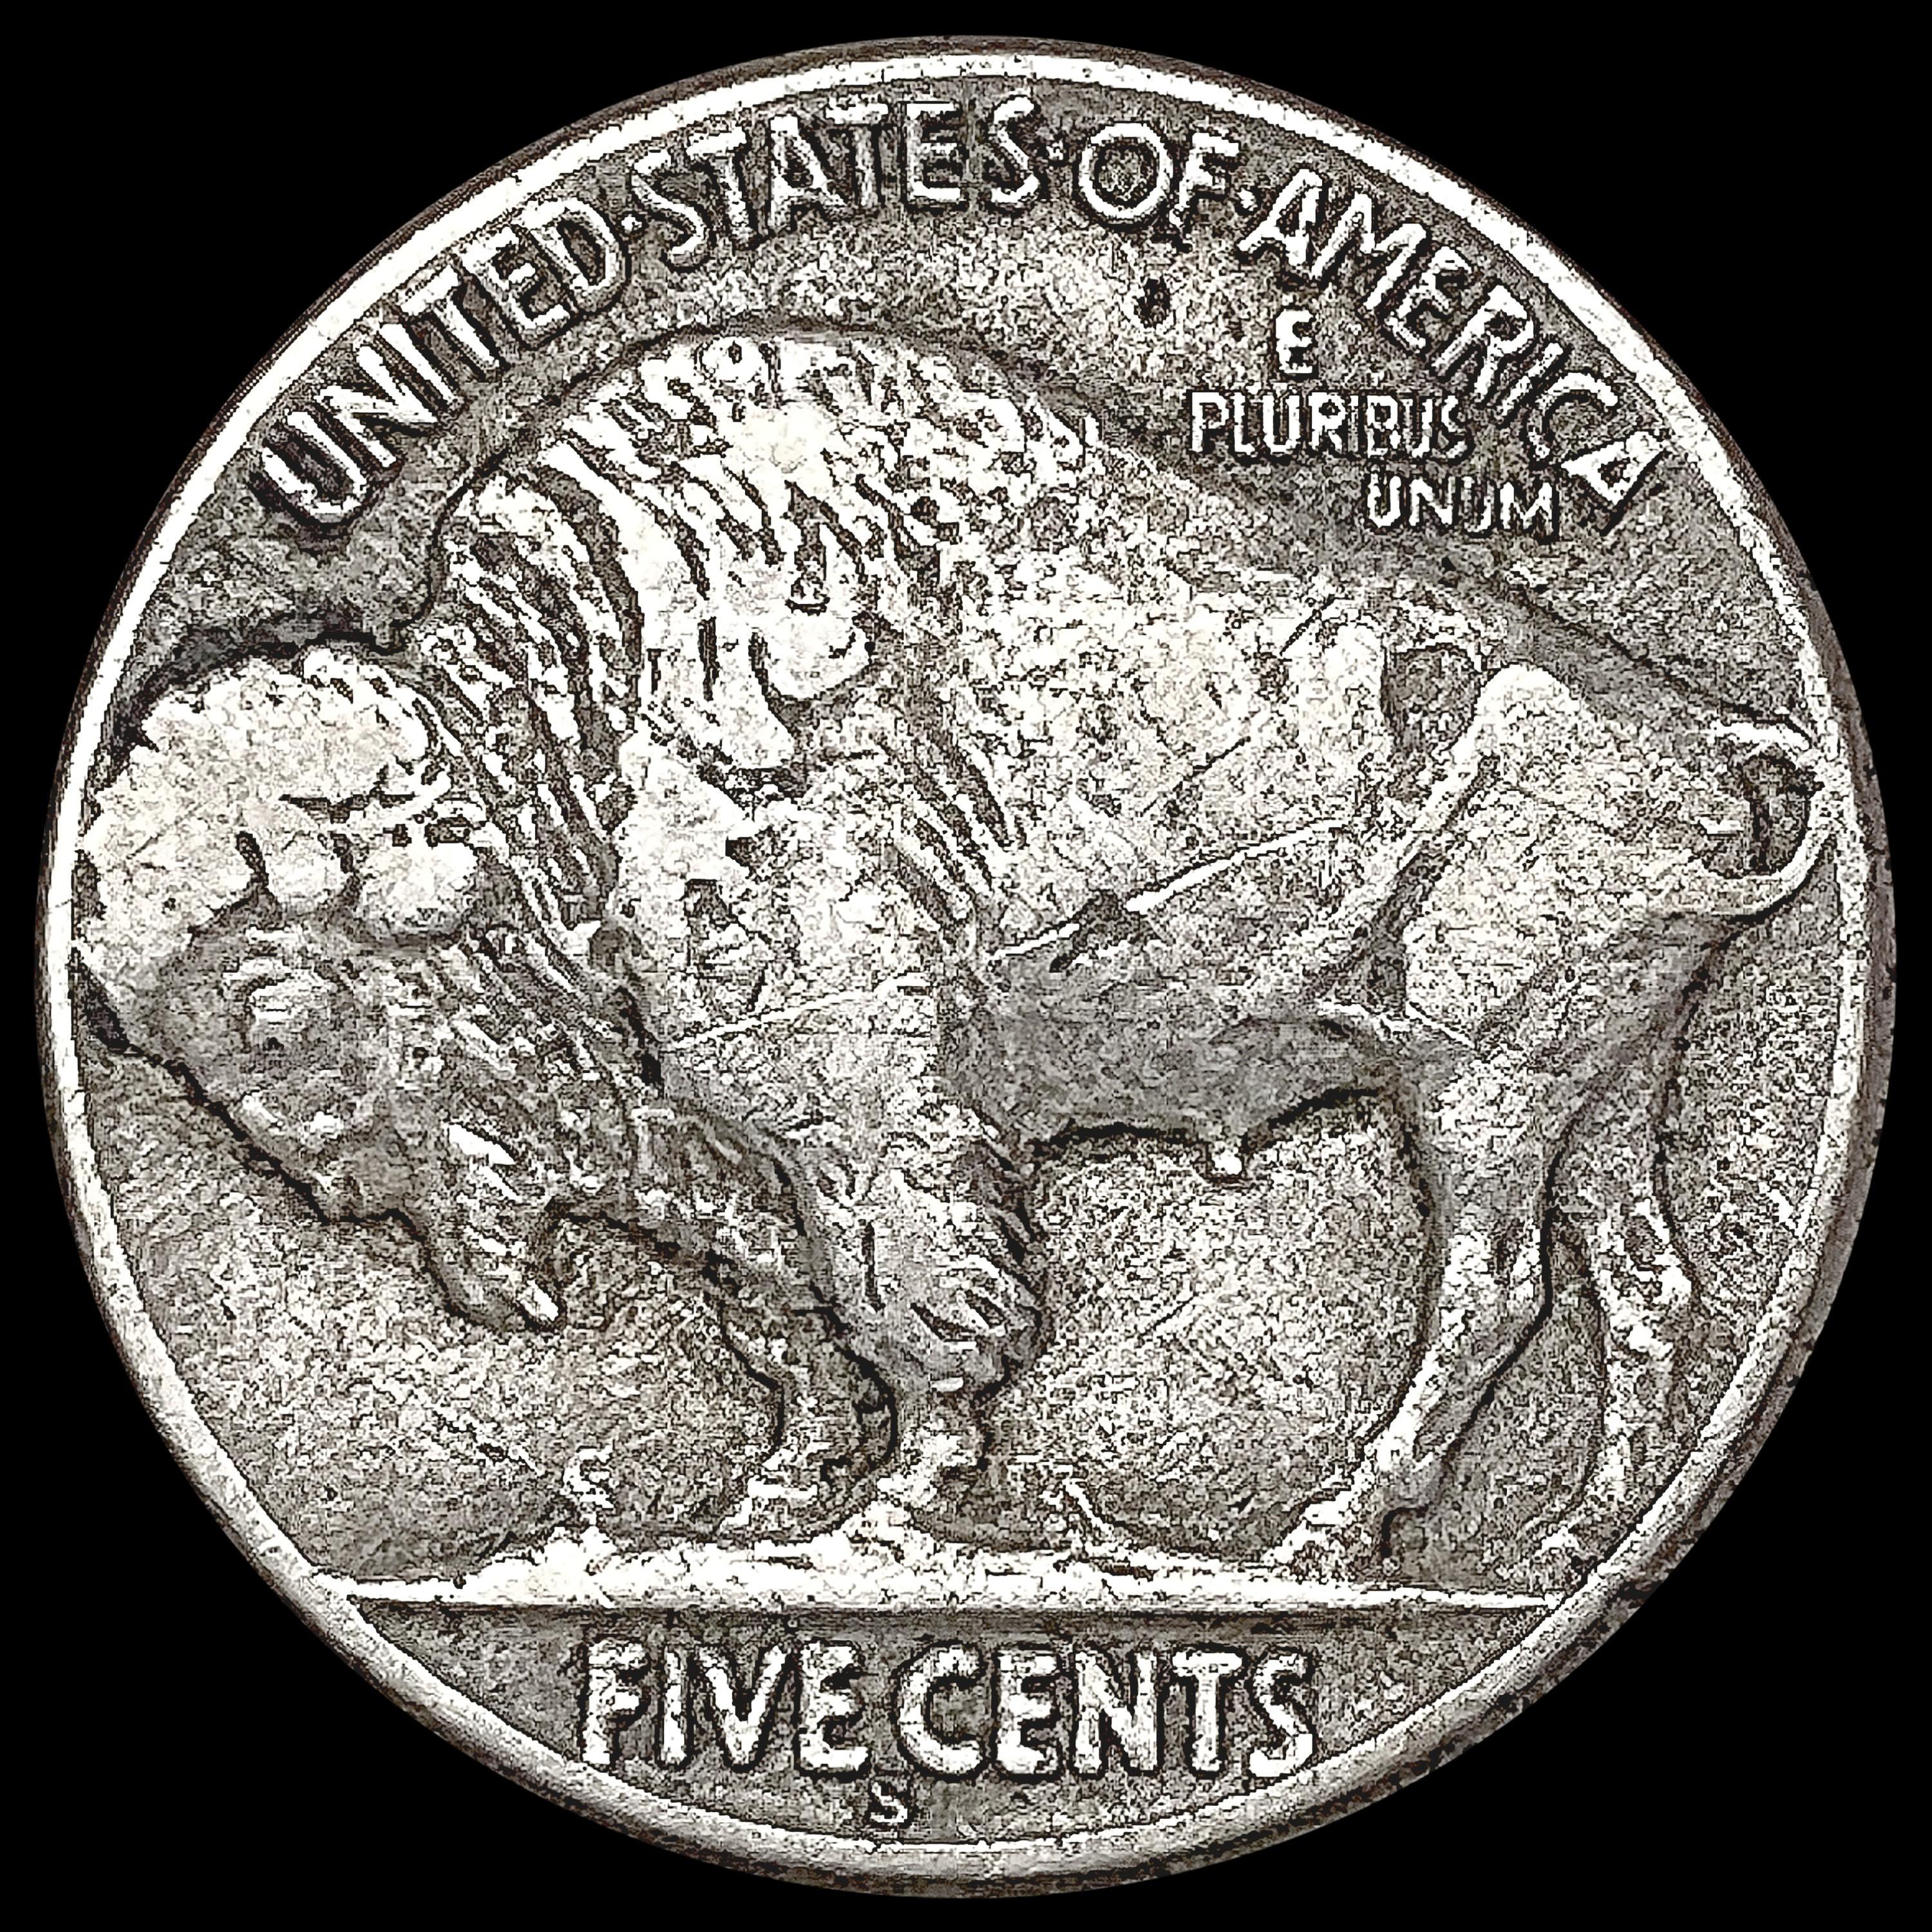 1923-S Buffalo Nickel LIGHTLY CIRCULATED